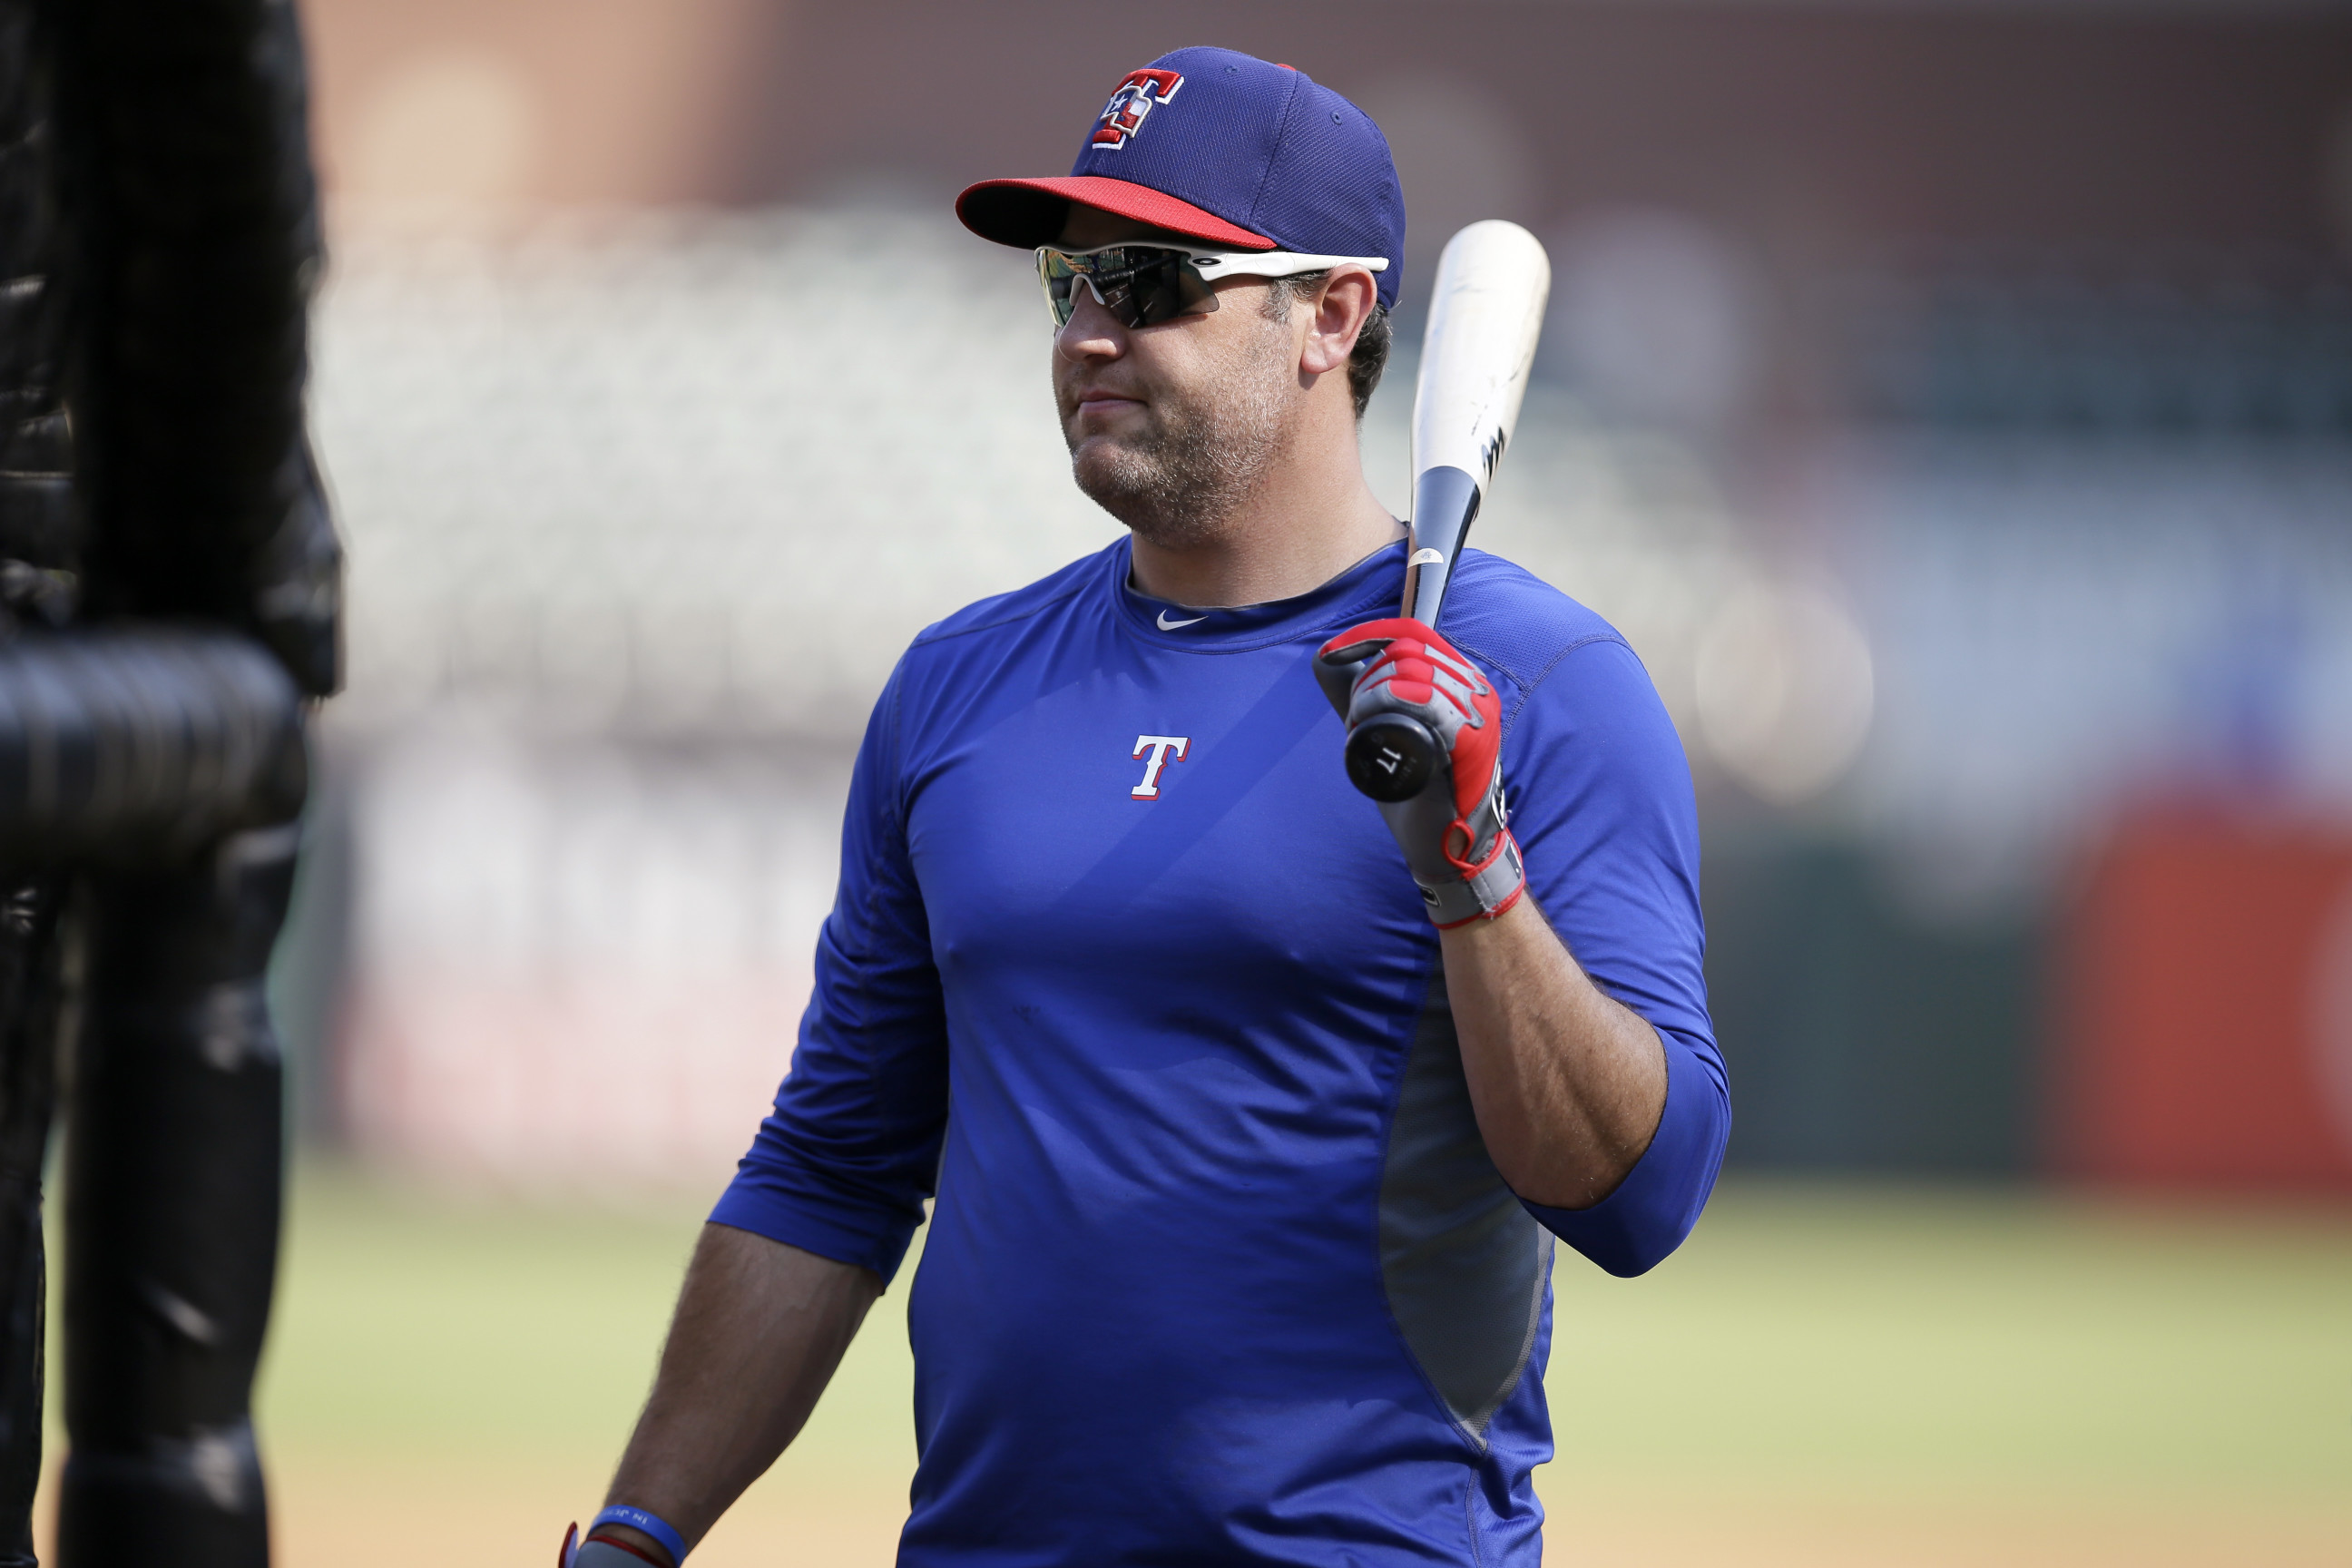 Houston Baptist University hires Lance Berkman as its new baseball coach